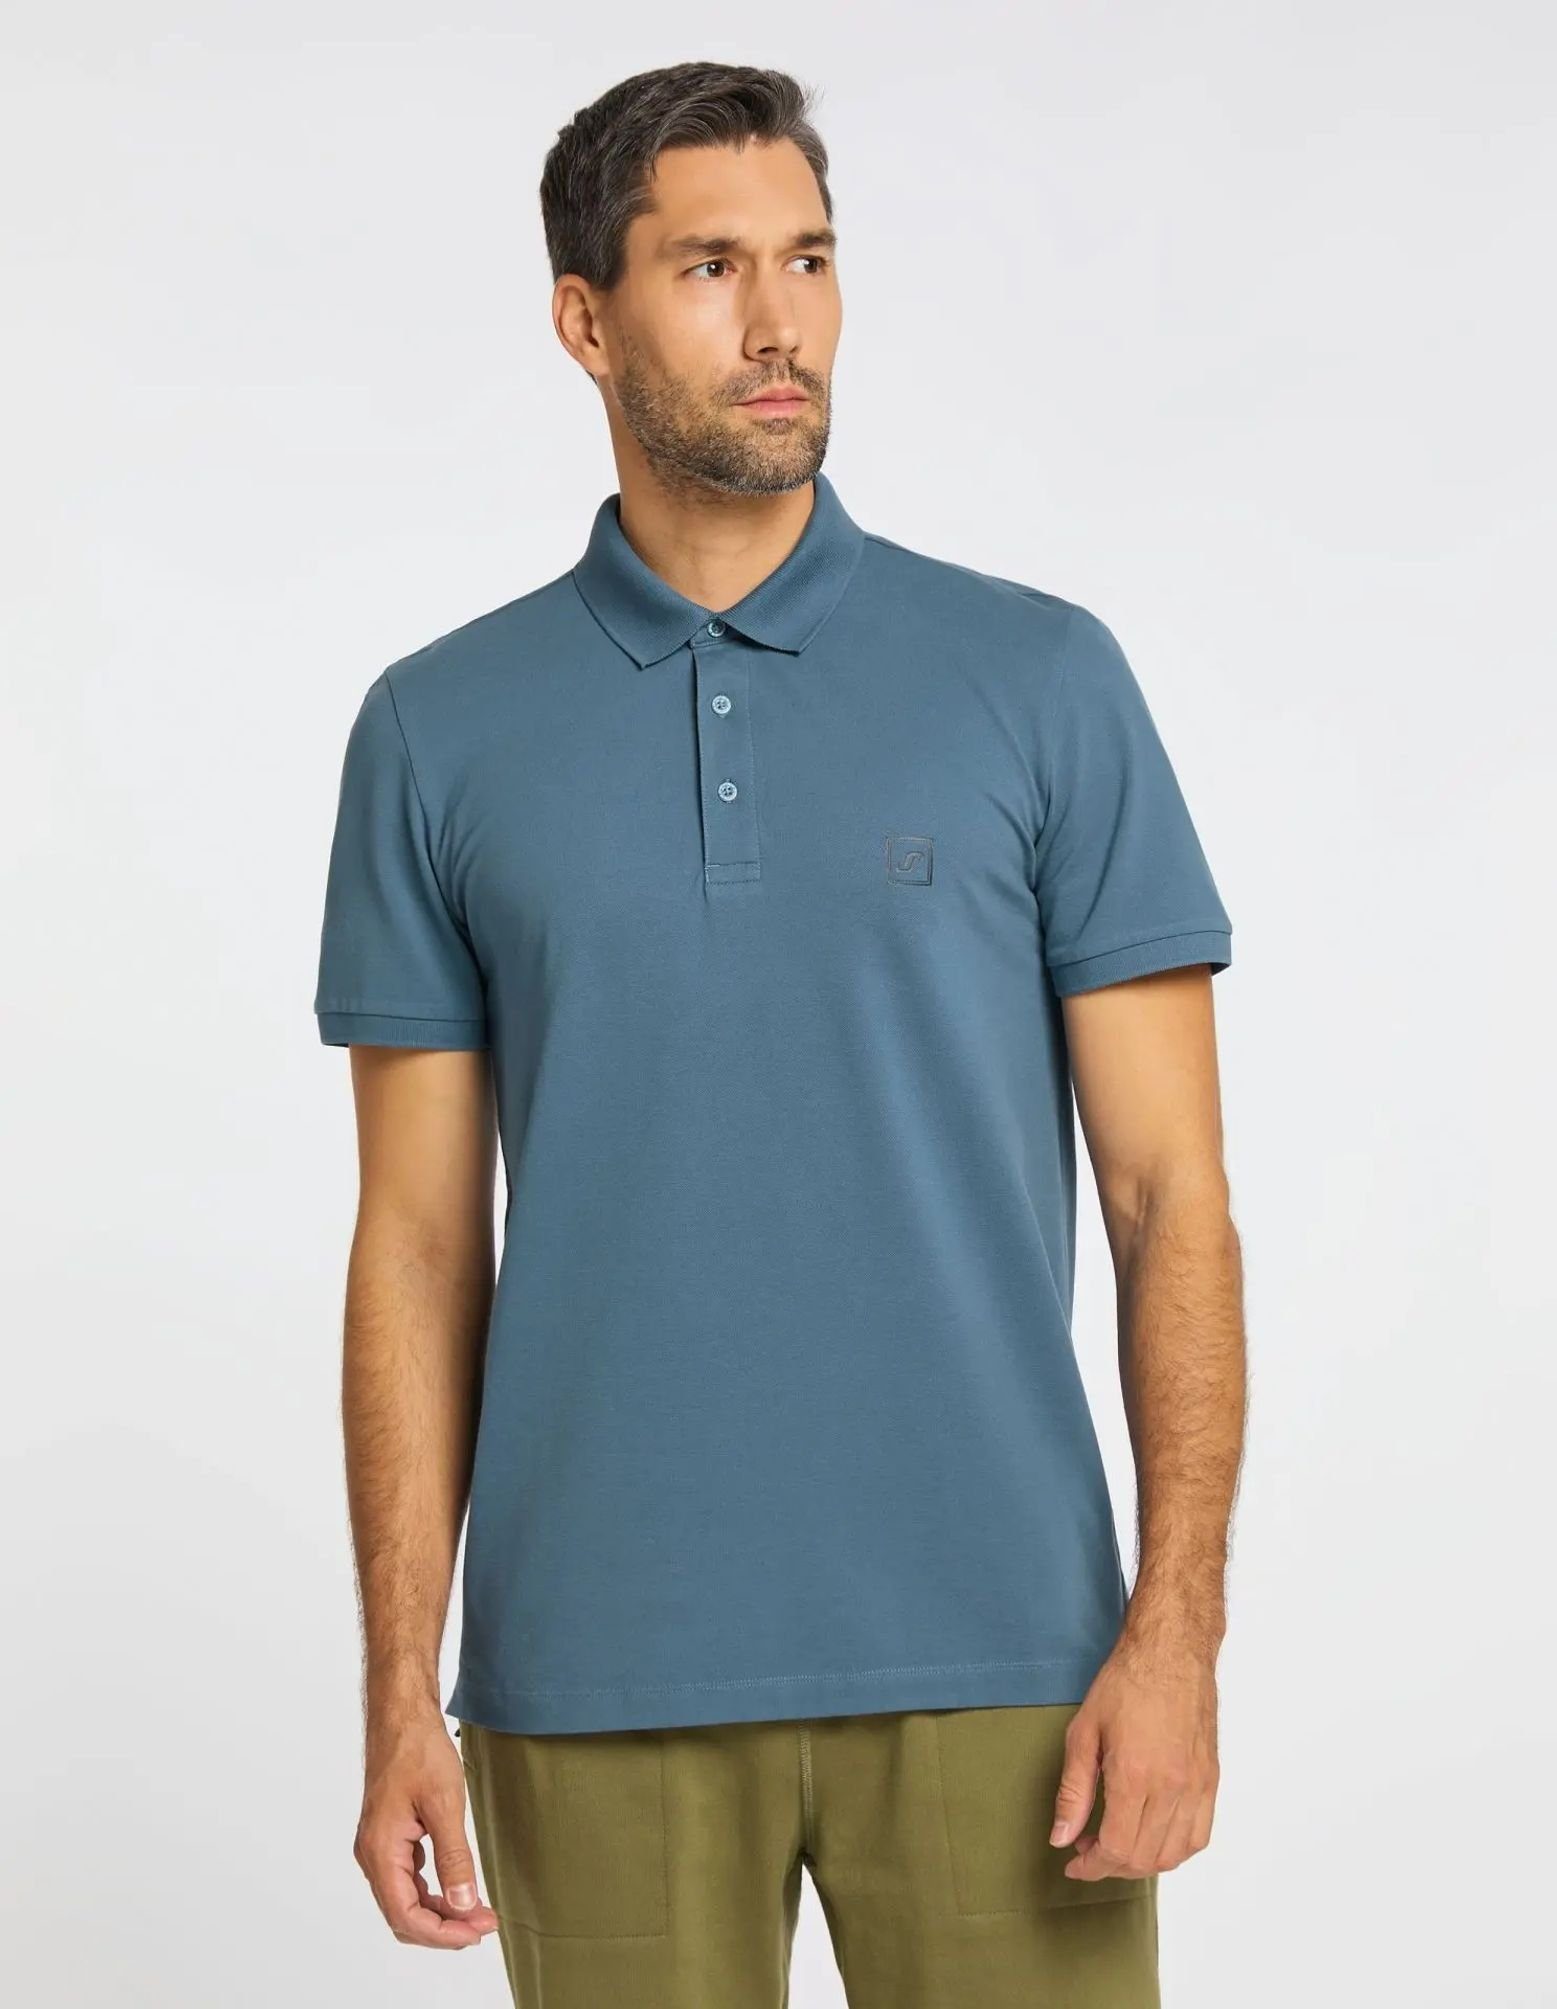 Harbour Lias Sportswear (10232) blue Trainingsshirt Joy